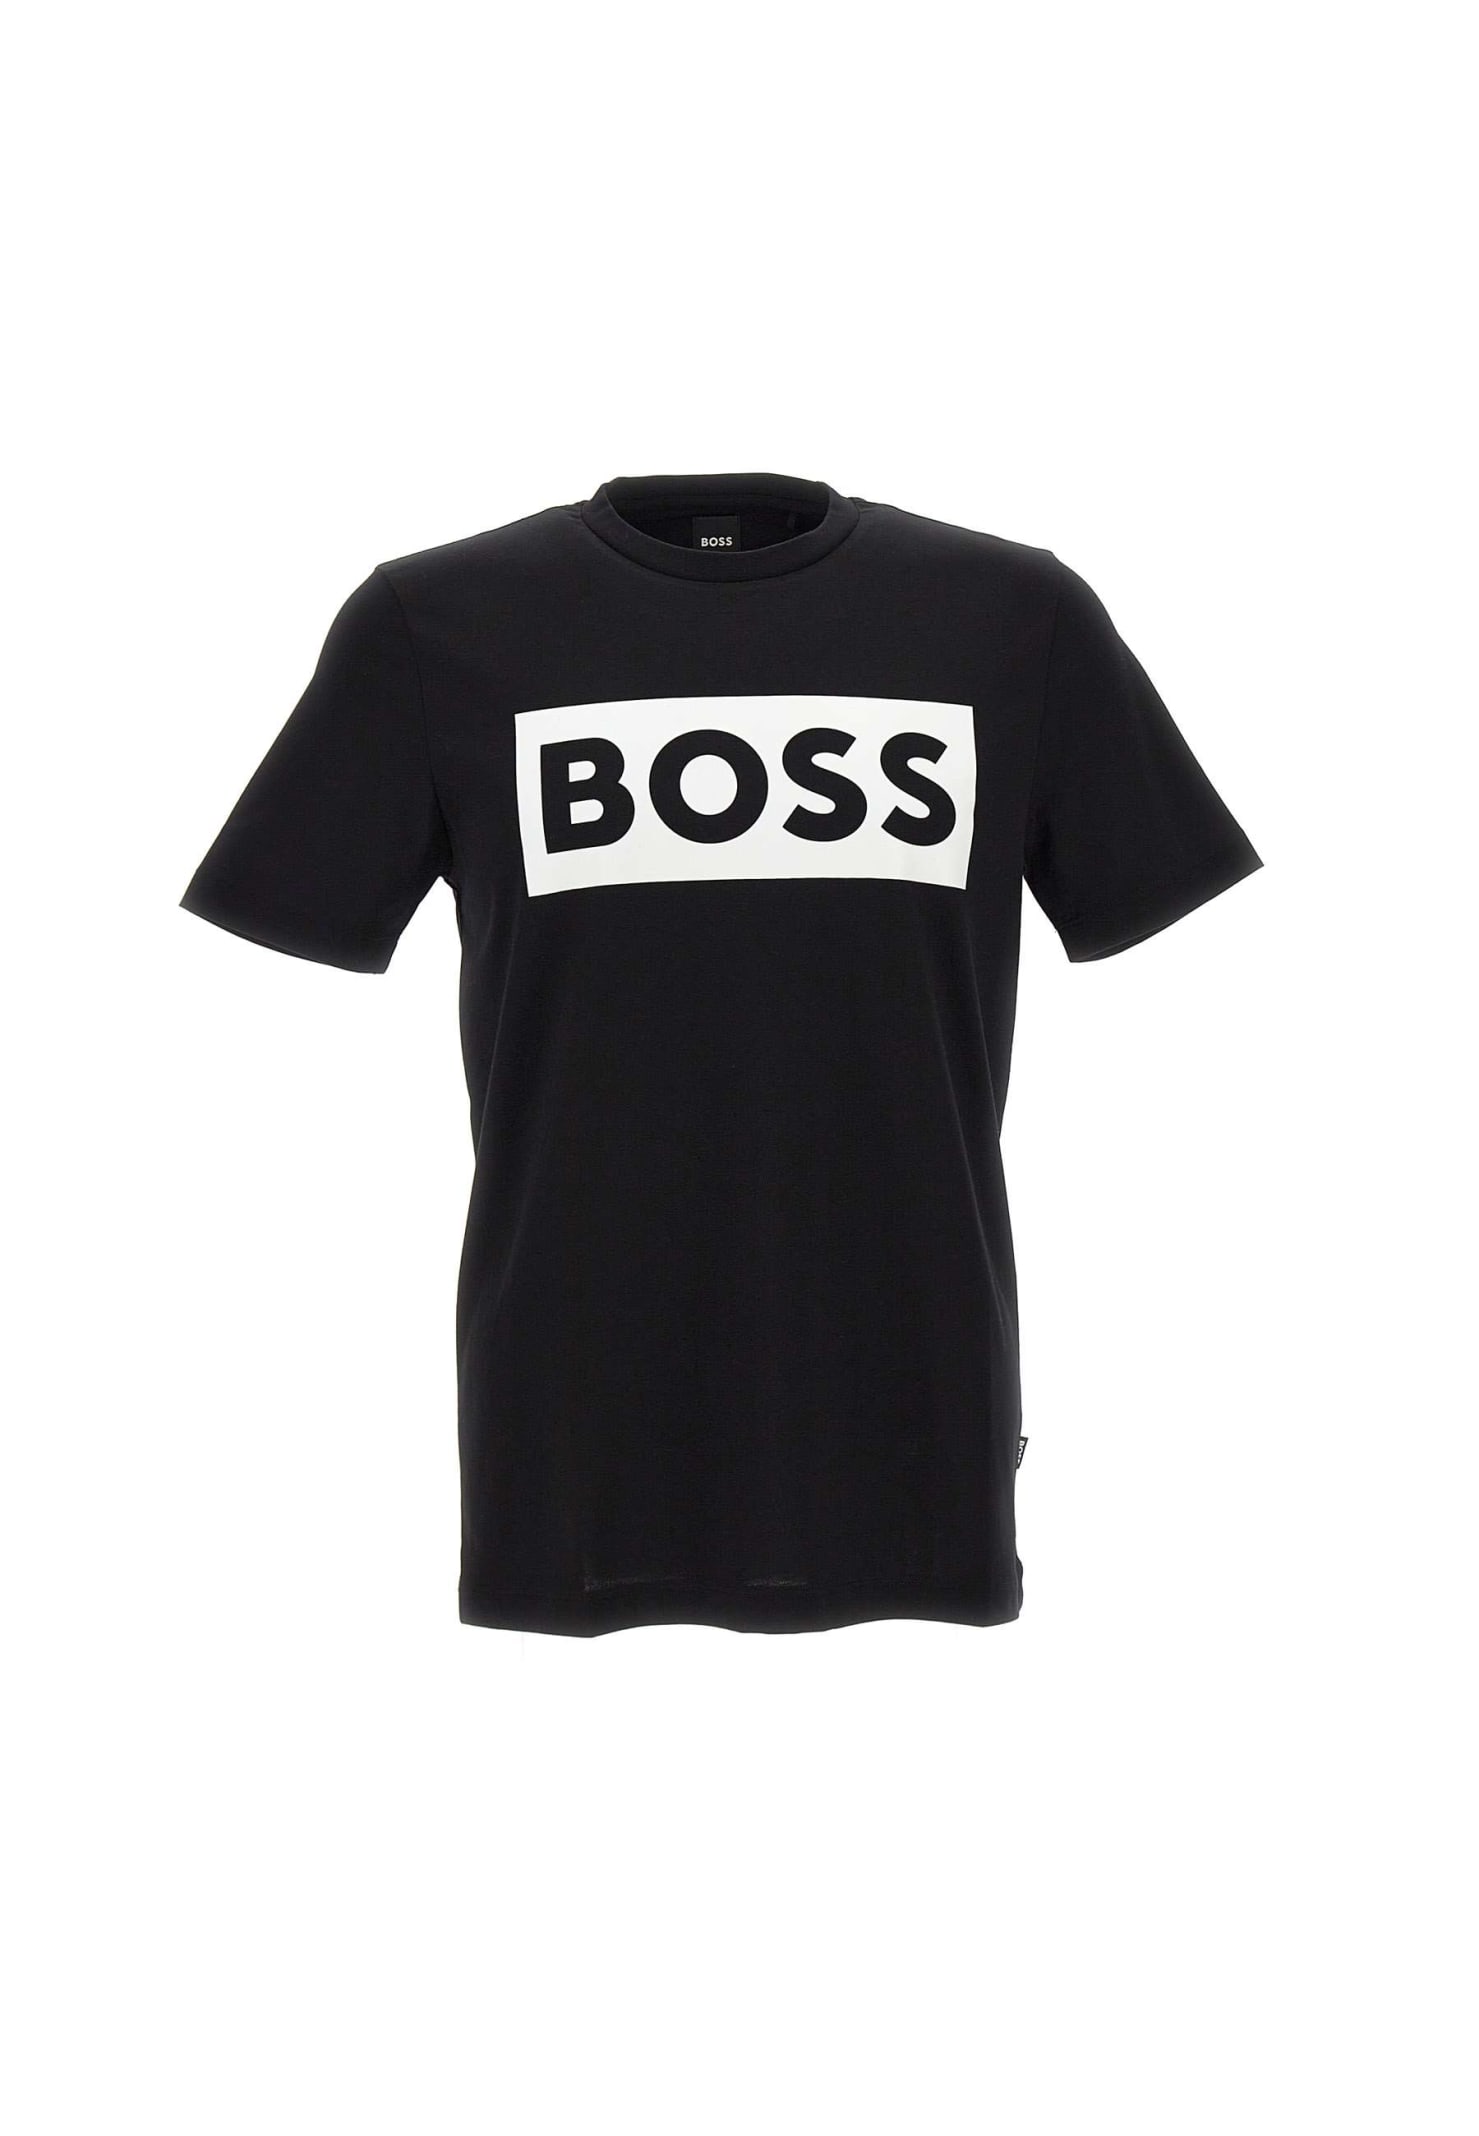 Hugo Boss Boss tiburt 292 Cotton T-shirt